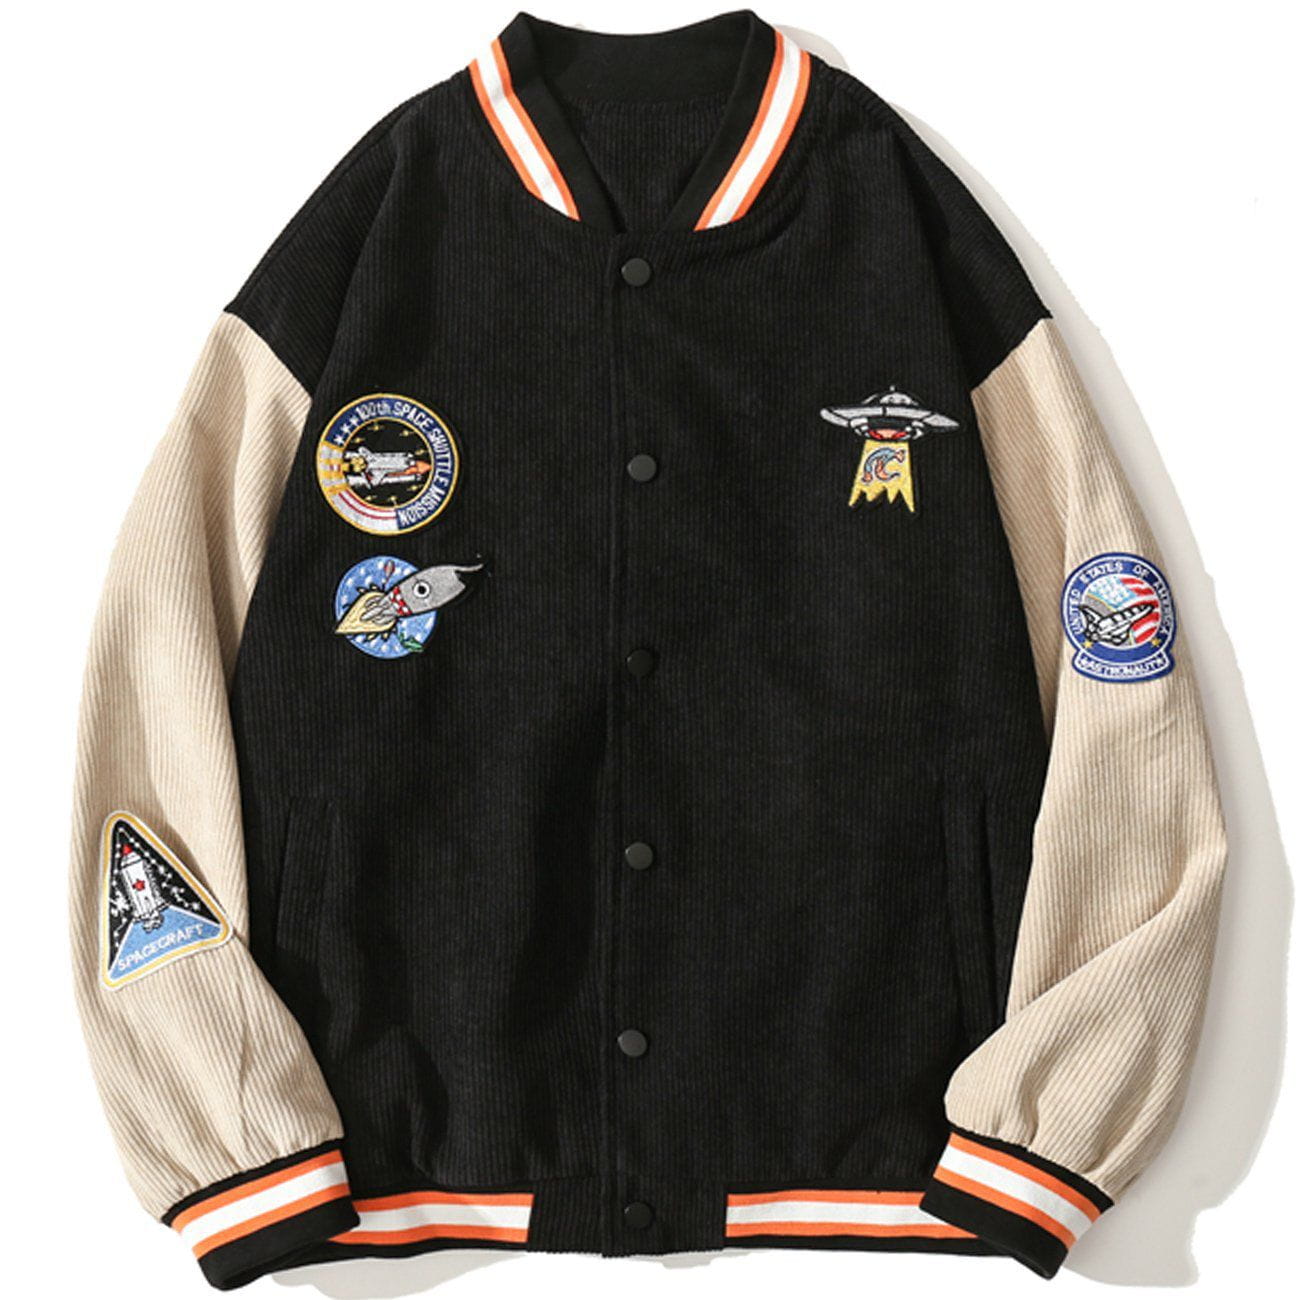 Eprezzy® - Rocket Spaceship Labeled Embroidery Corduroy Jacket Streetwear Fashion - eprezzy.com